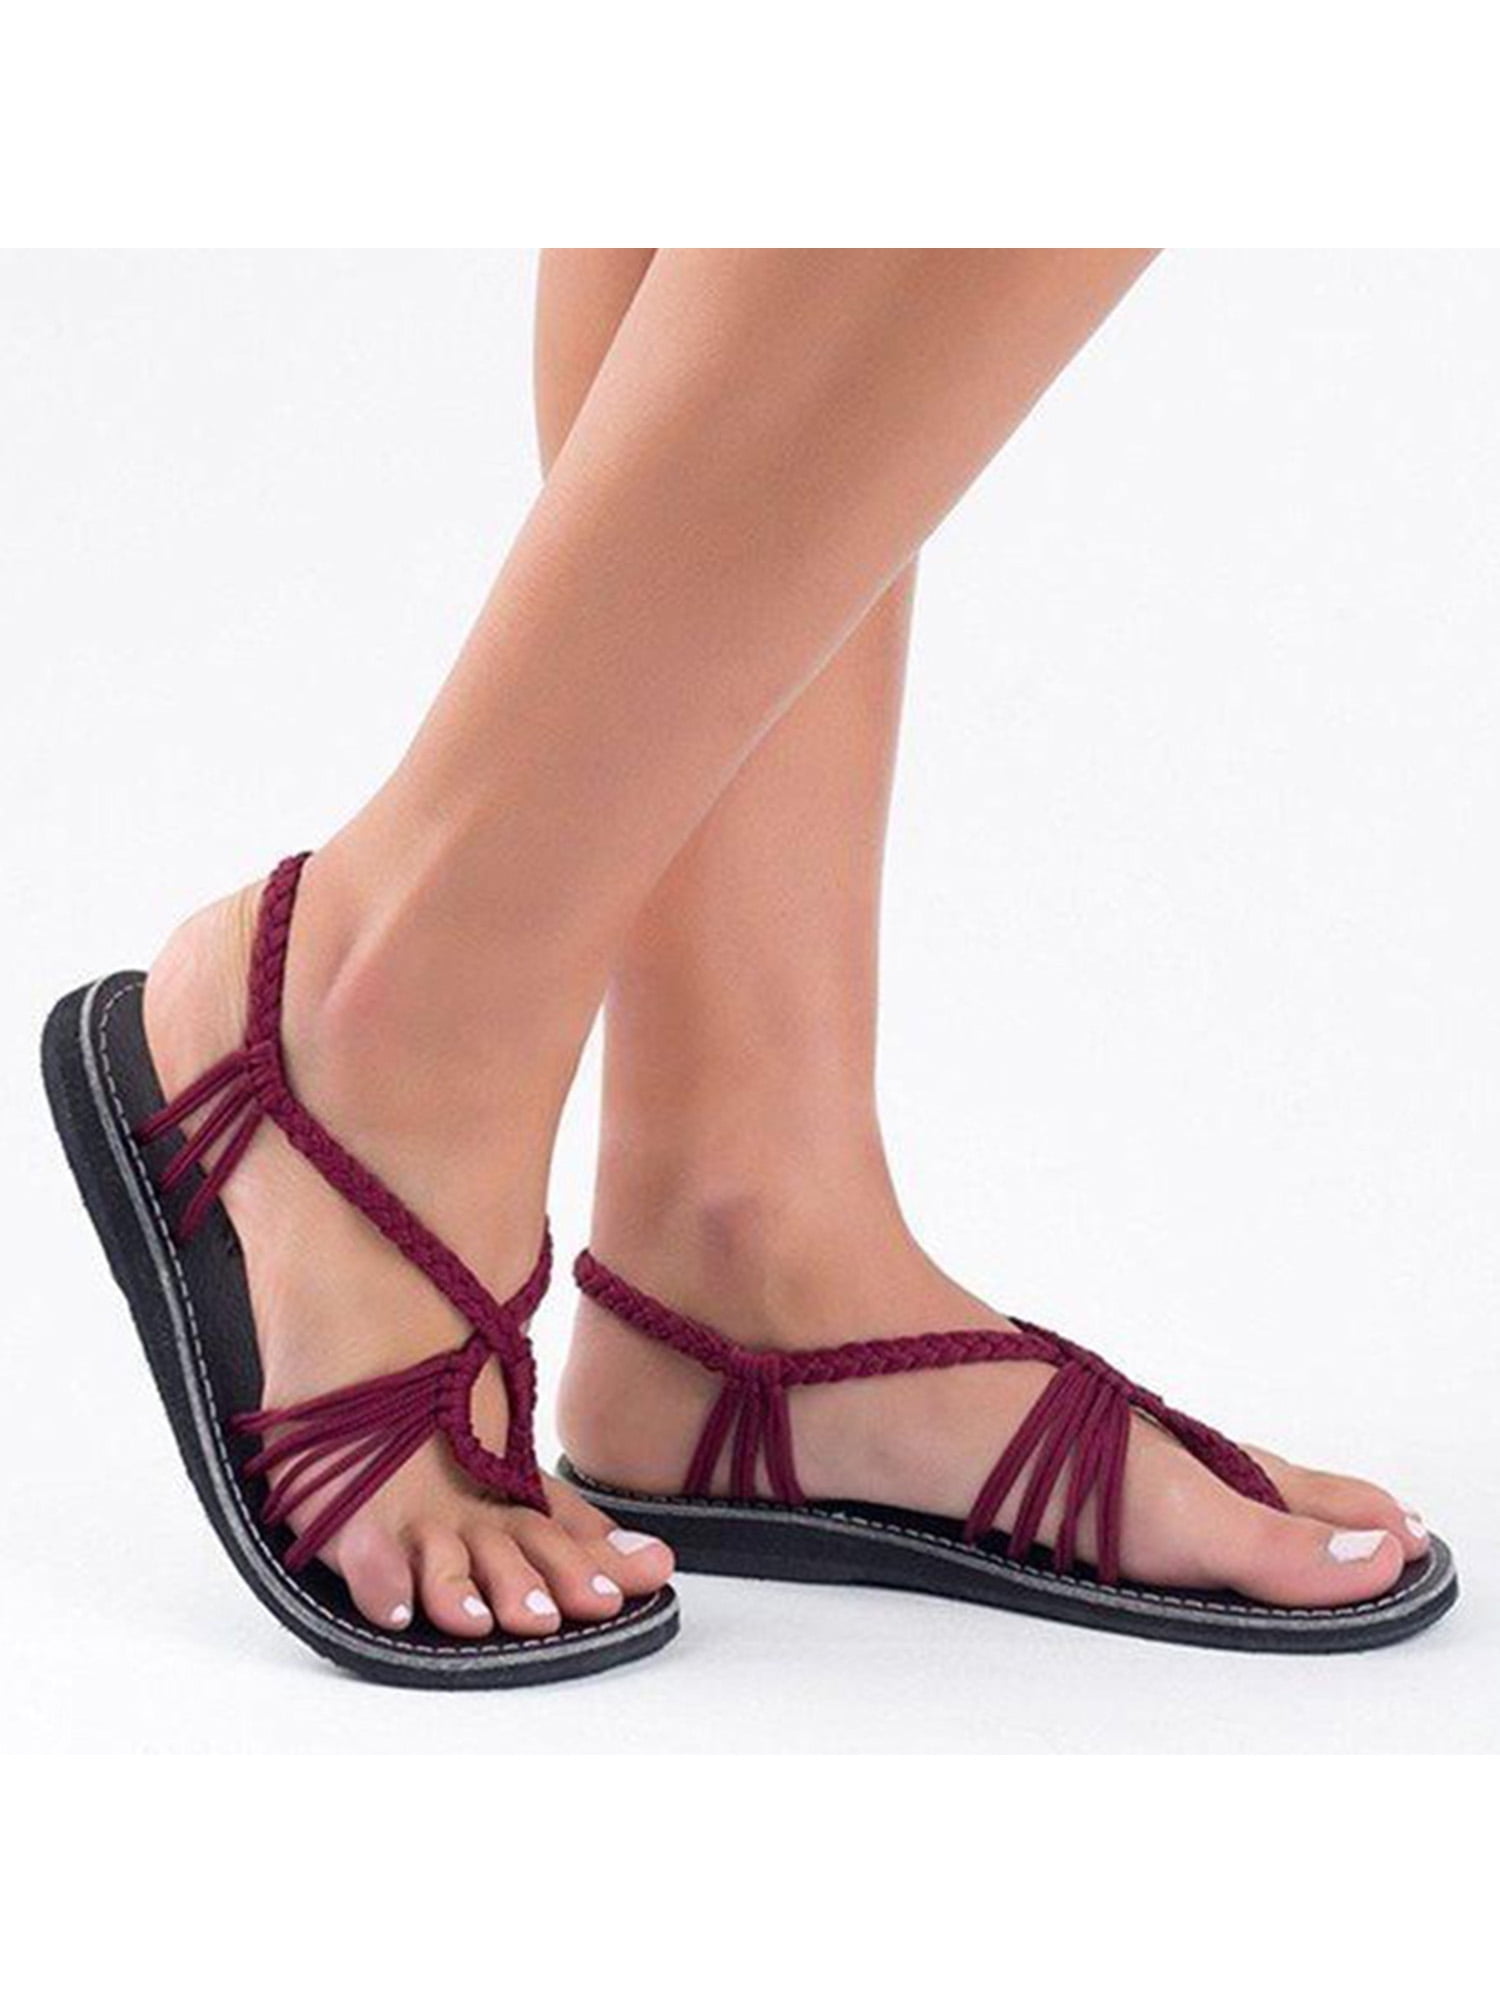 SIMANLAN Women Flip Flops Open Toe Slip On Beach Sandals Casual